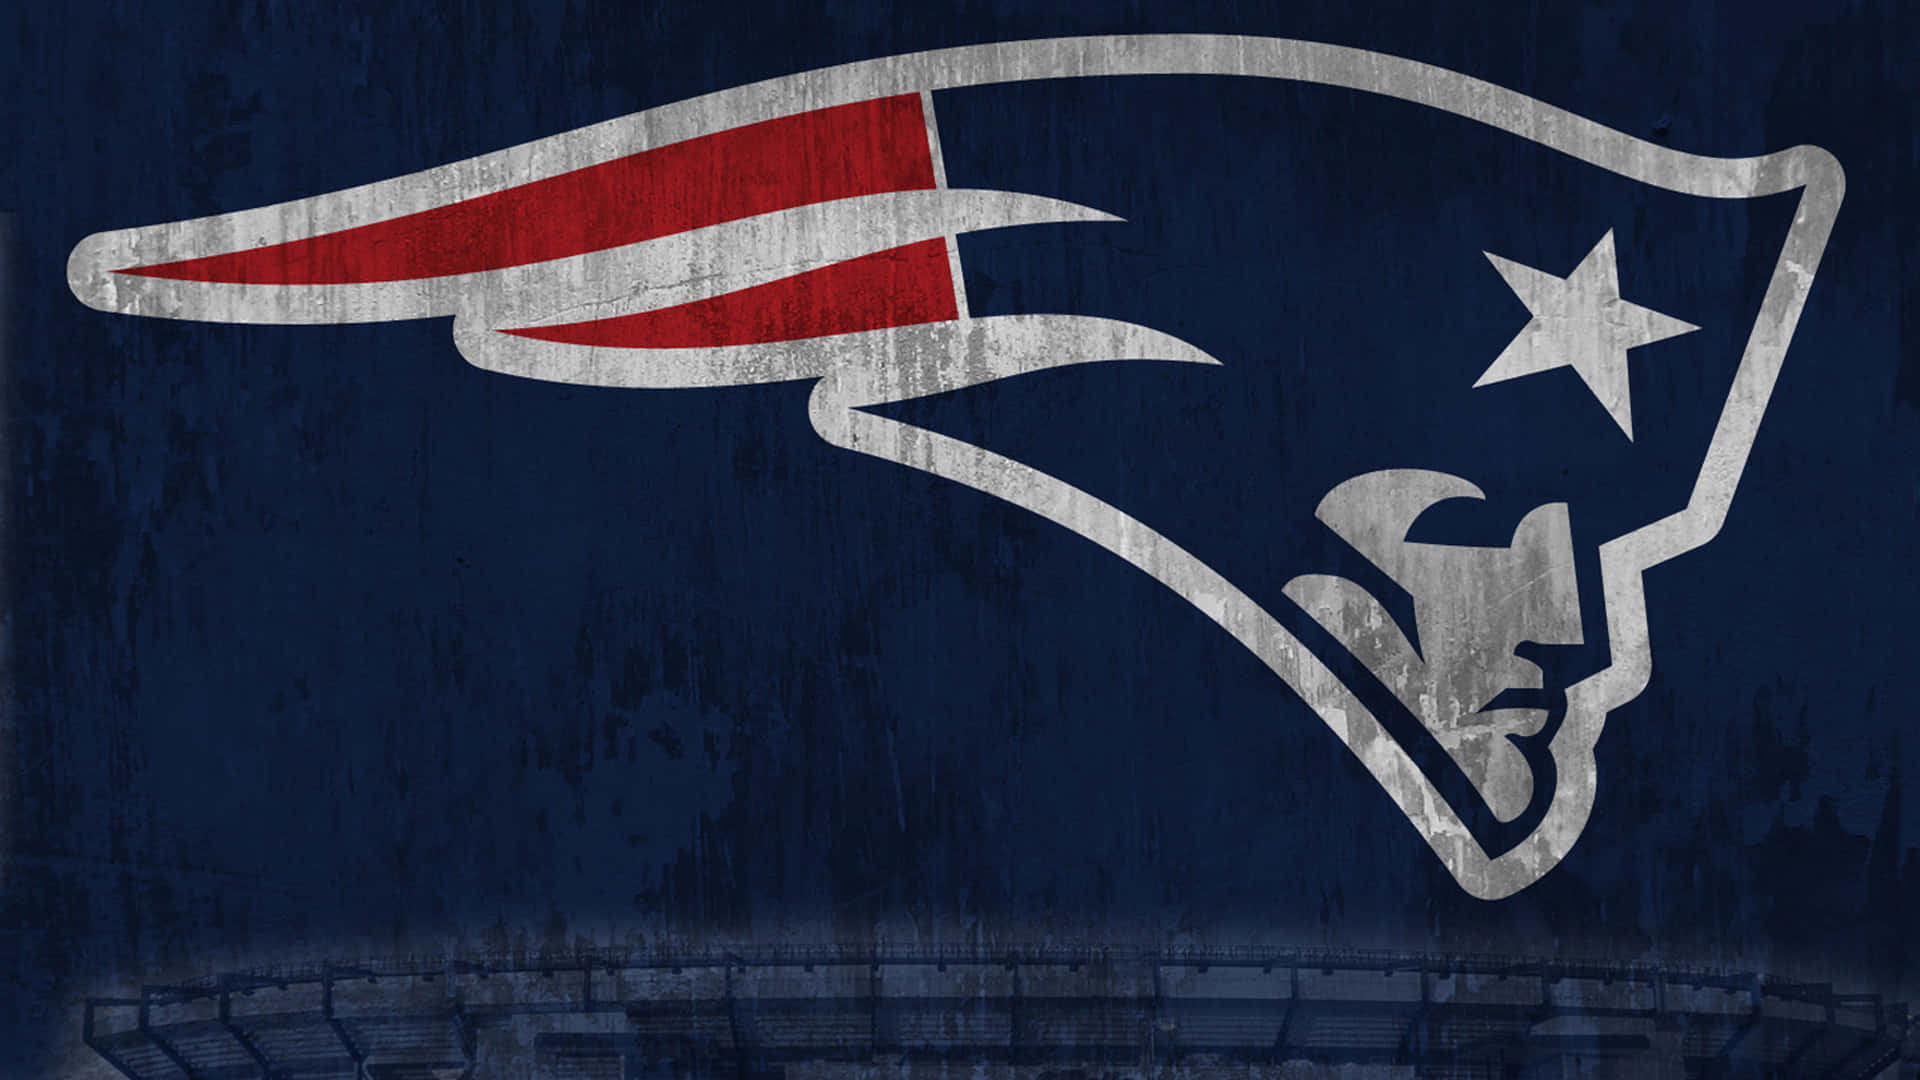 !Vis din patriotiskhed med denne fantastiske New England Patriots skrivebordsbaggrund! Wallpaper